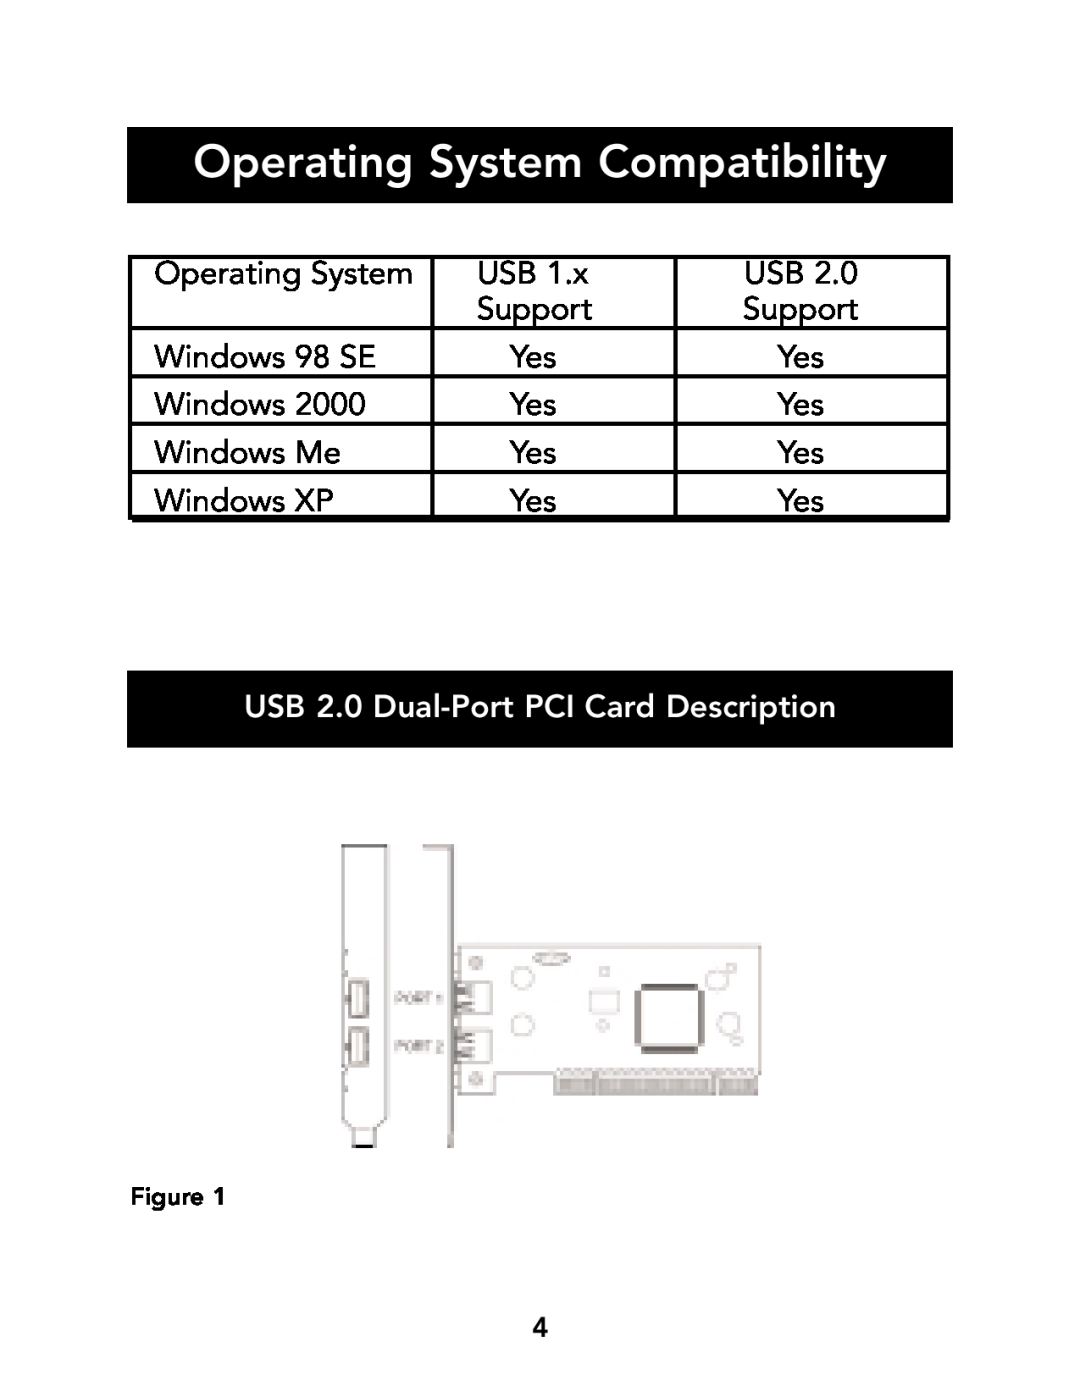 Belkin F5U219, P73941 manual Operating System Compatibility, USB 2.0 Dual-Port PCI Card Description 